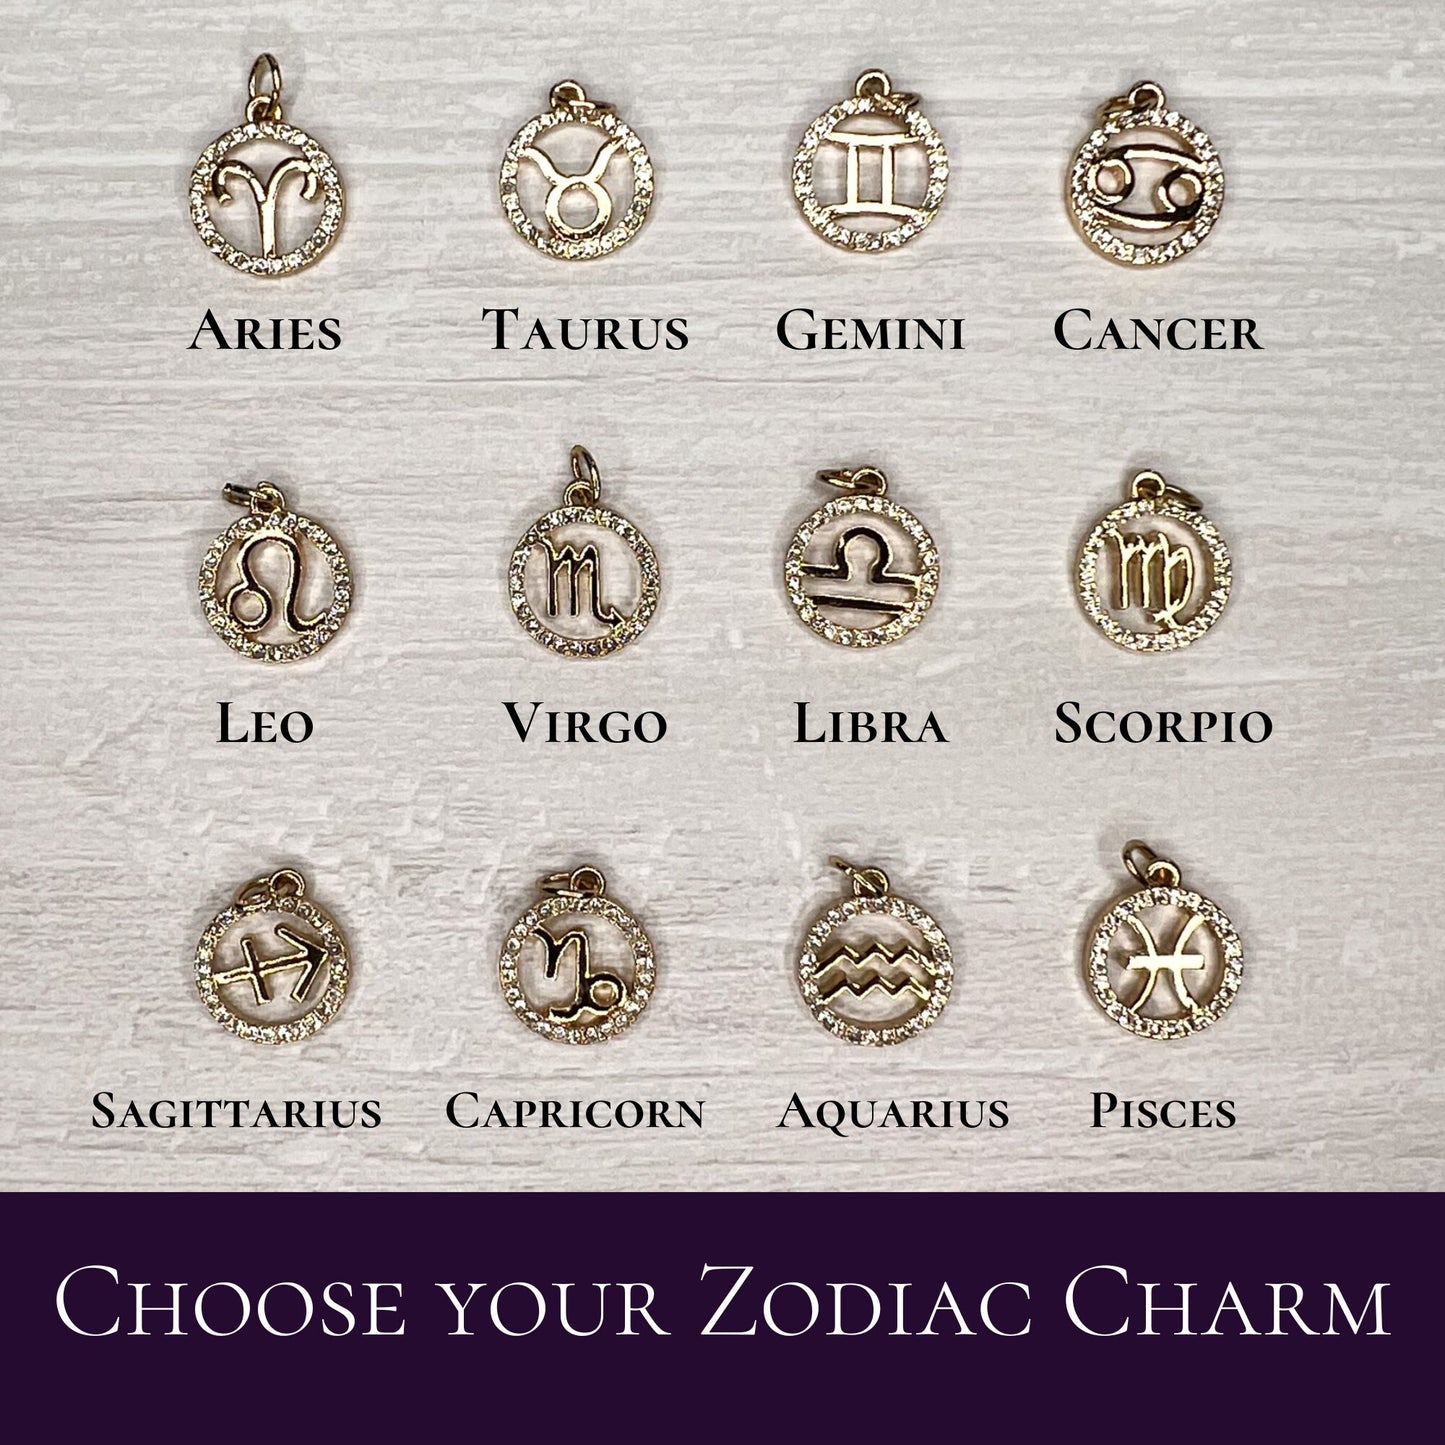 Zodiac Charm Tarot Wrap, Cotton Tarot Card Storage and Cloth, Tarot Deck Holder, Zodiac Tarot Mat, Divination Tools, Wiccan Supplies & Gifts